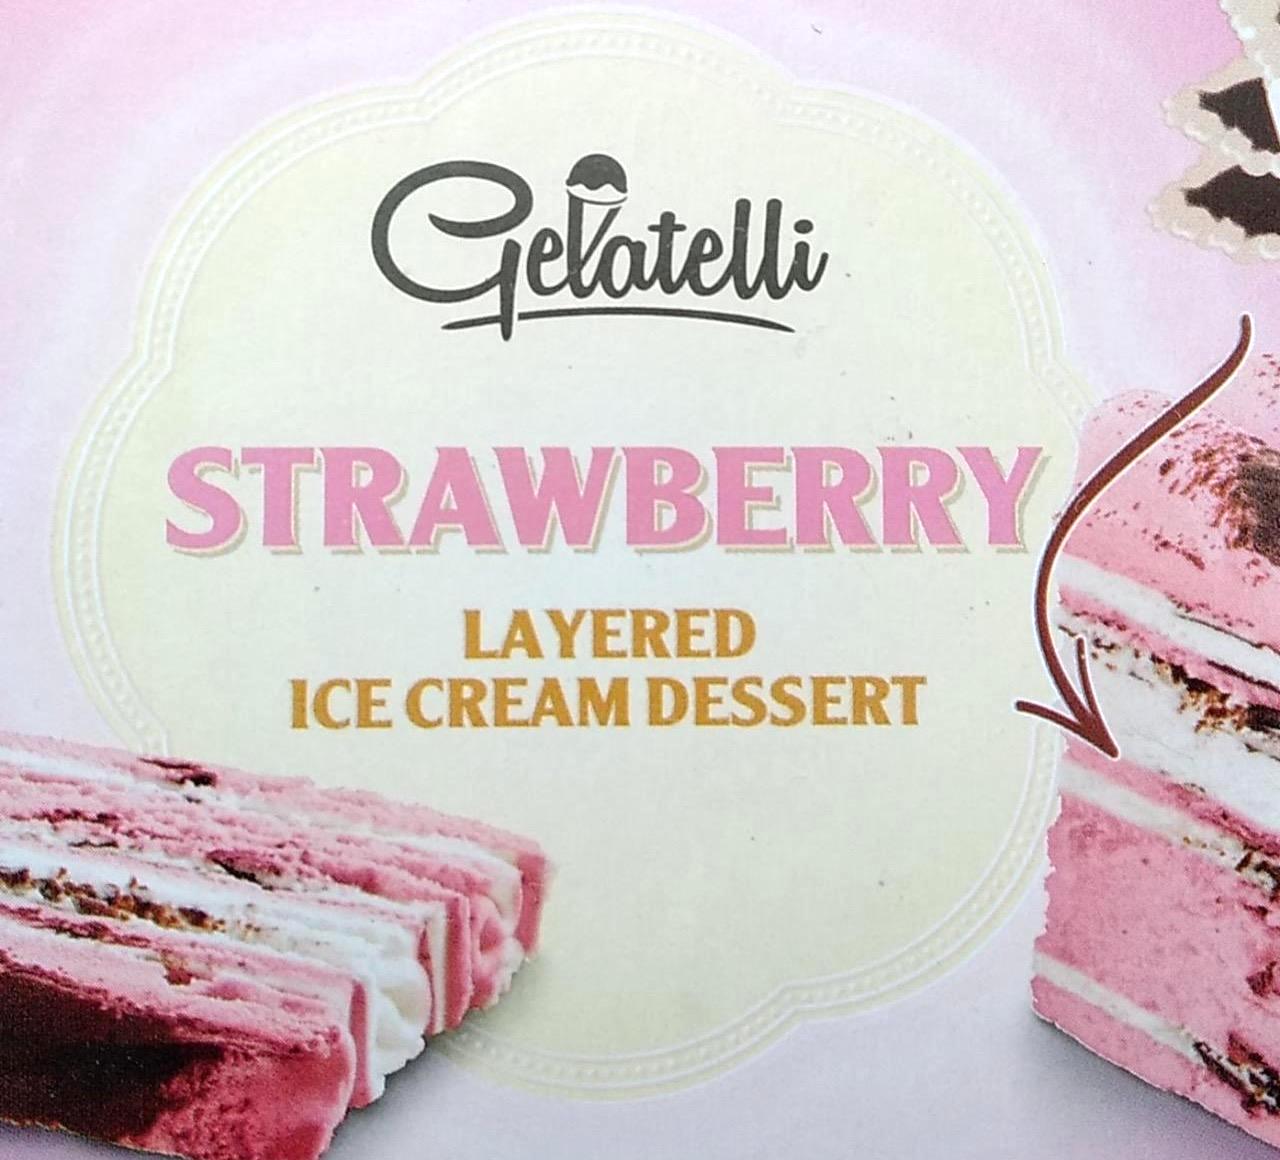 Képek - Strawberry layered ice cream desszert Gelatelli